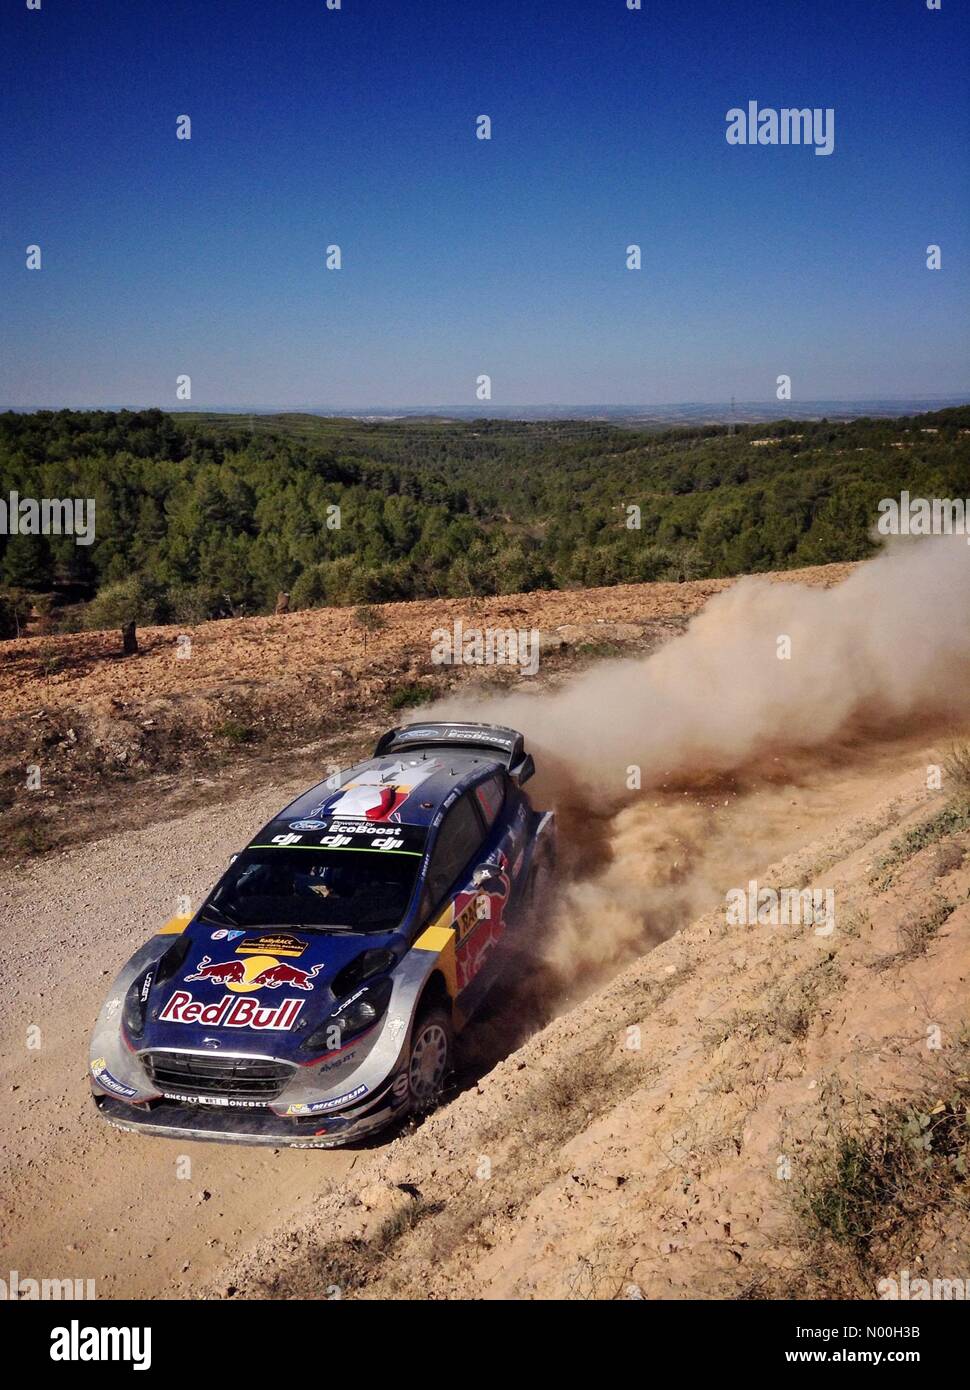 SPORT : RallyRACC WRC Catalunya / Rally de España 2017. L'étape spéciale SS3 - Terra Alta 1, Sébastien Ogier / Julien Ingrassia dans leur Ford Fiesta WRC Rally voiture, Catalogne, Espagne. 06/10/2017 Banque D'Images